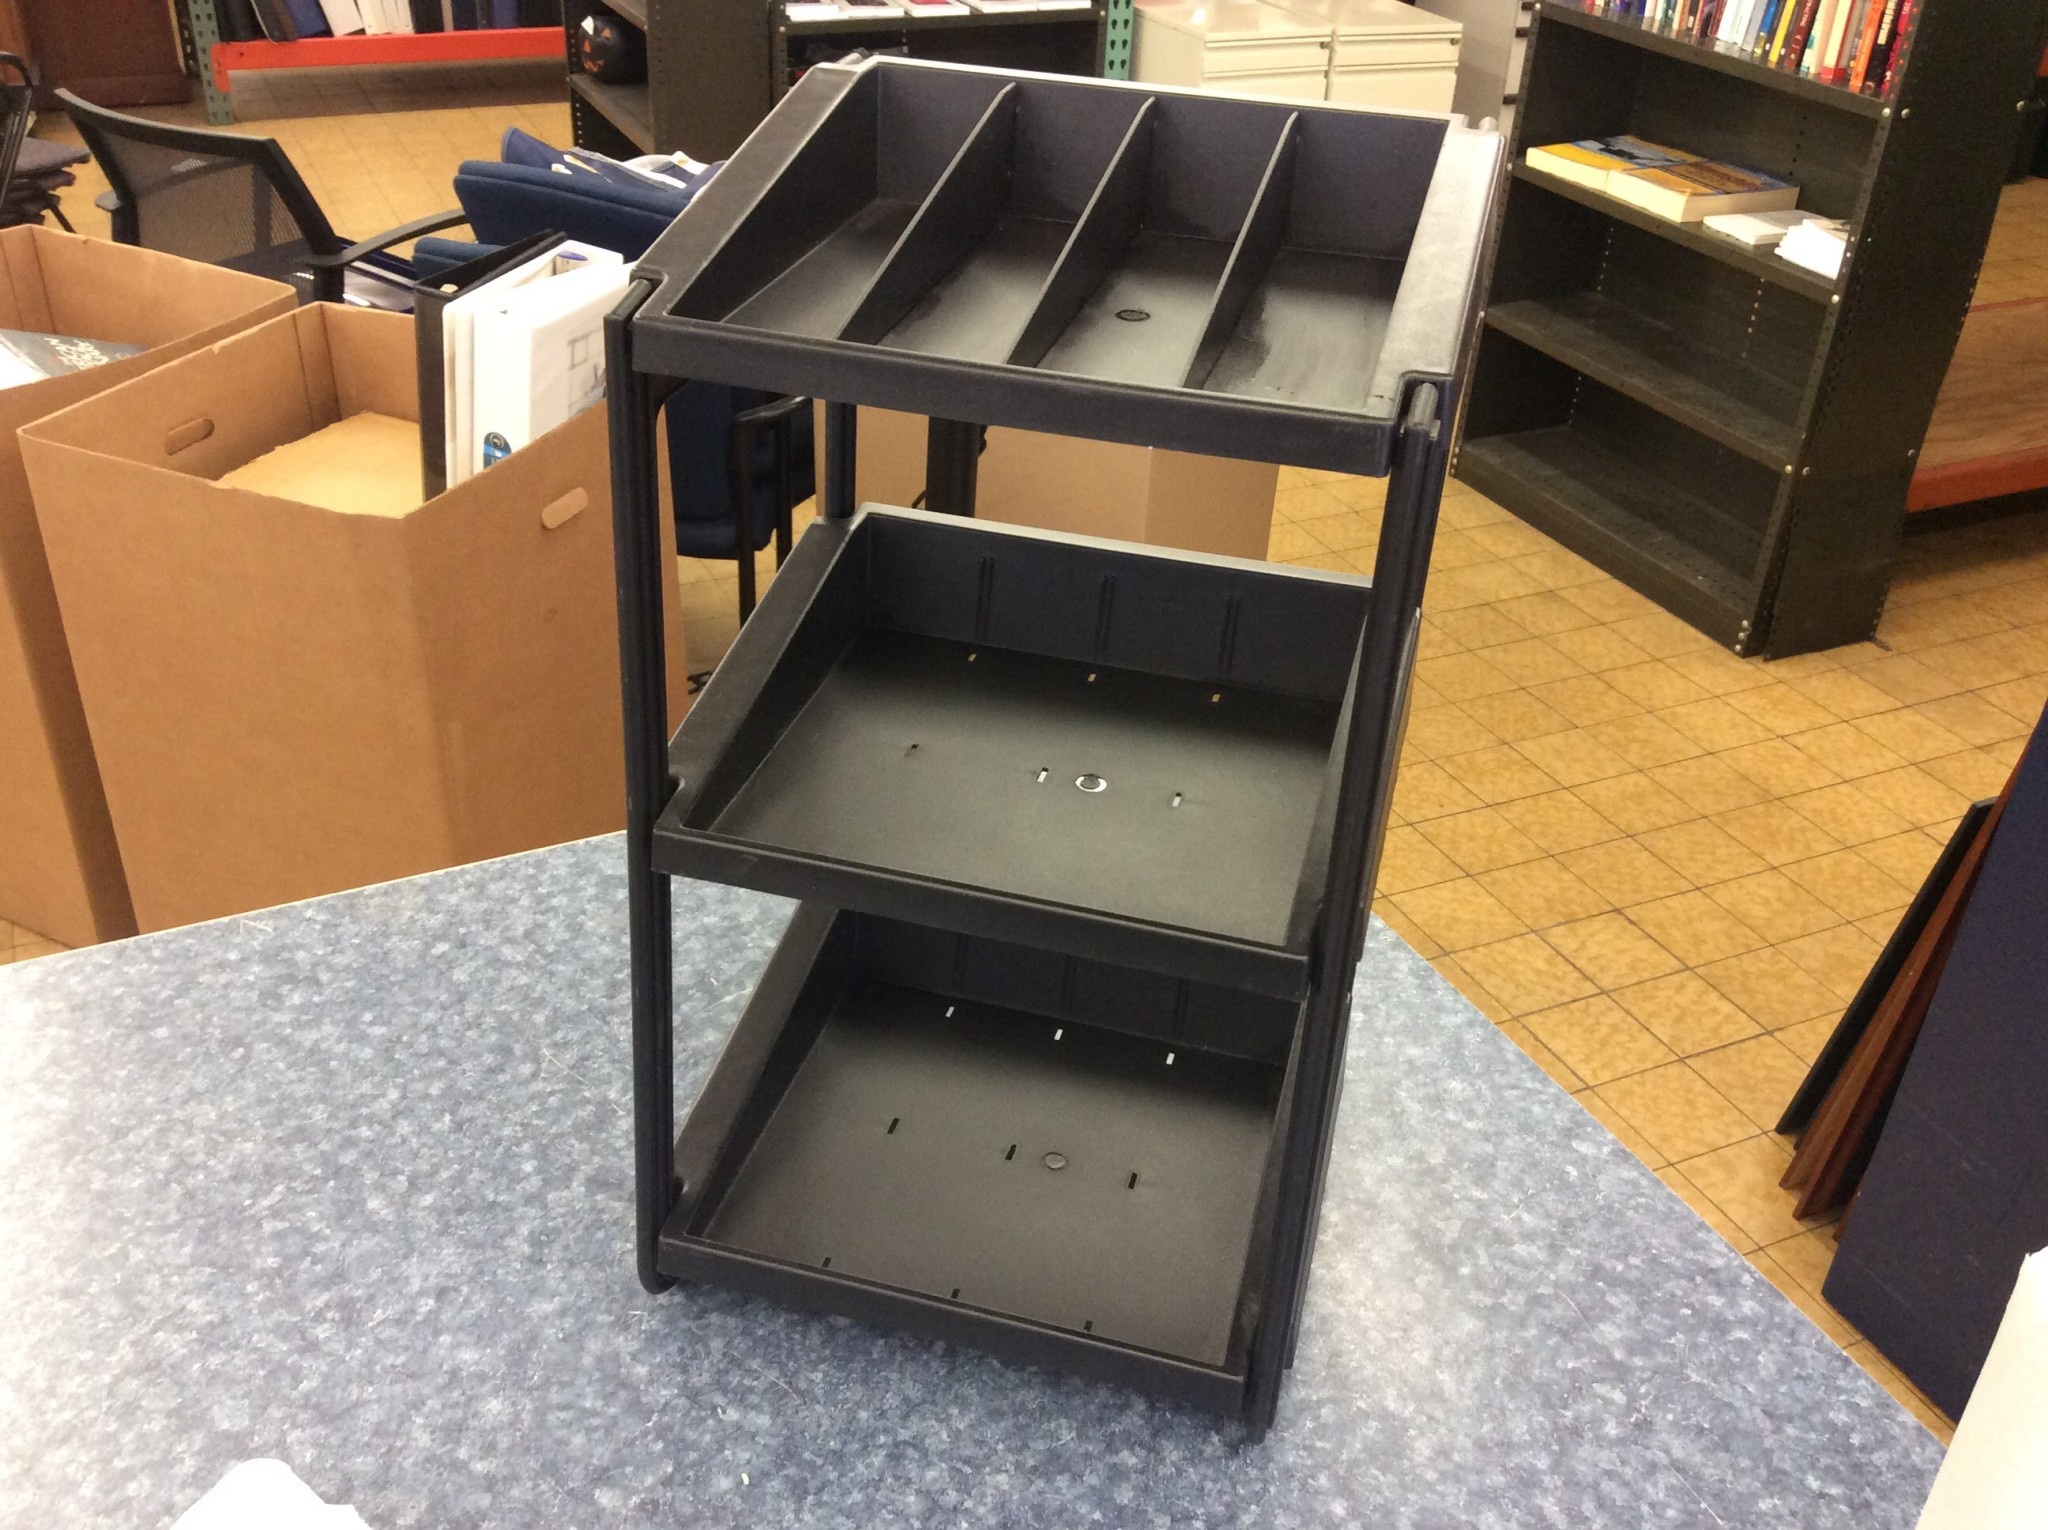 9x10 1 2x18 Black Plastic Countertop Shelf Unit 3 20 2020 Nd